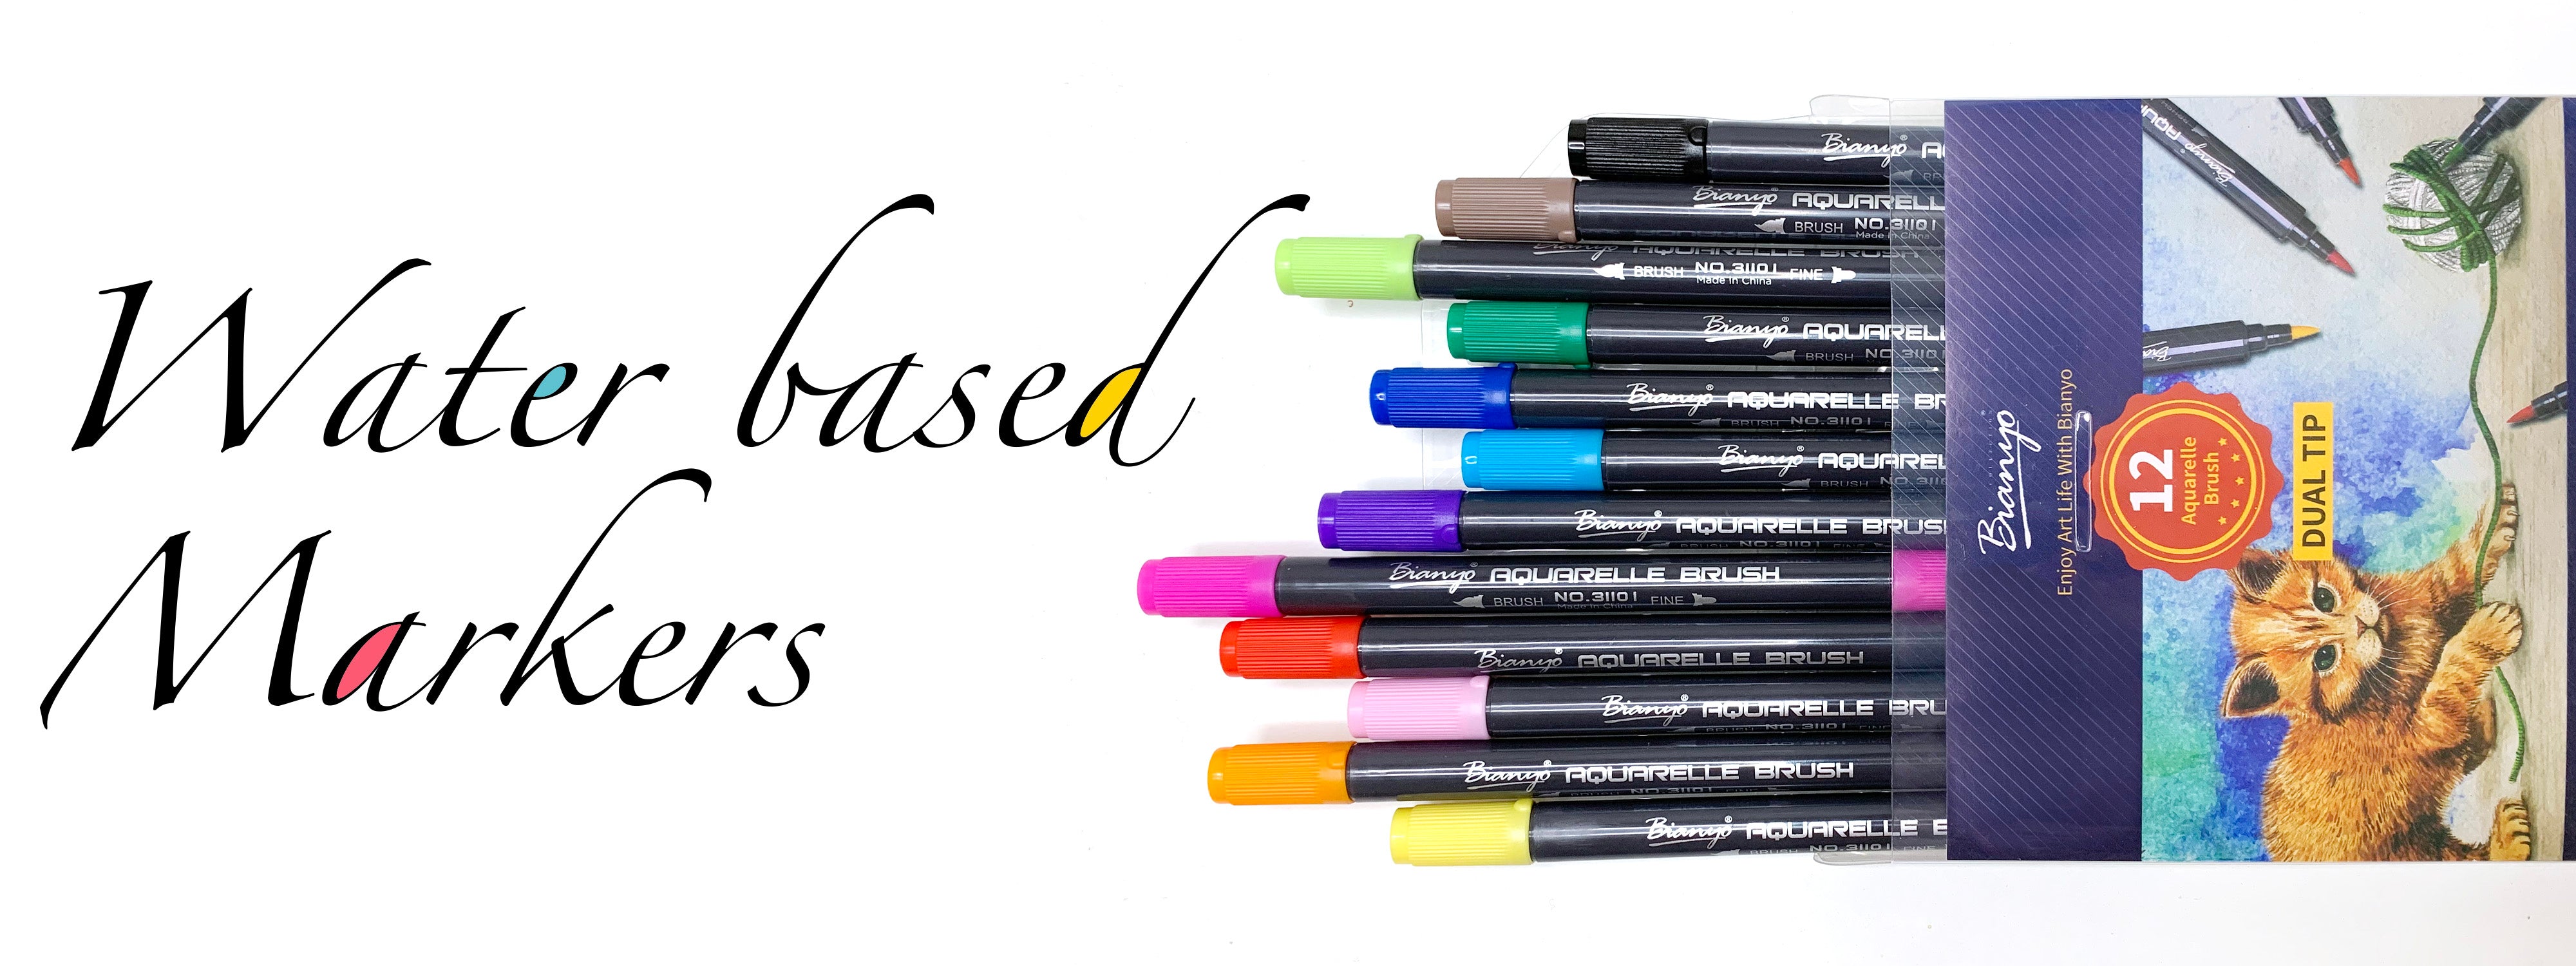 Bianyo Archival Ink Micro Pens, fineliner, graphic, Waterproof pens set of 9